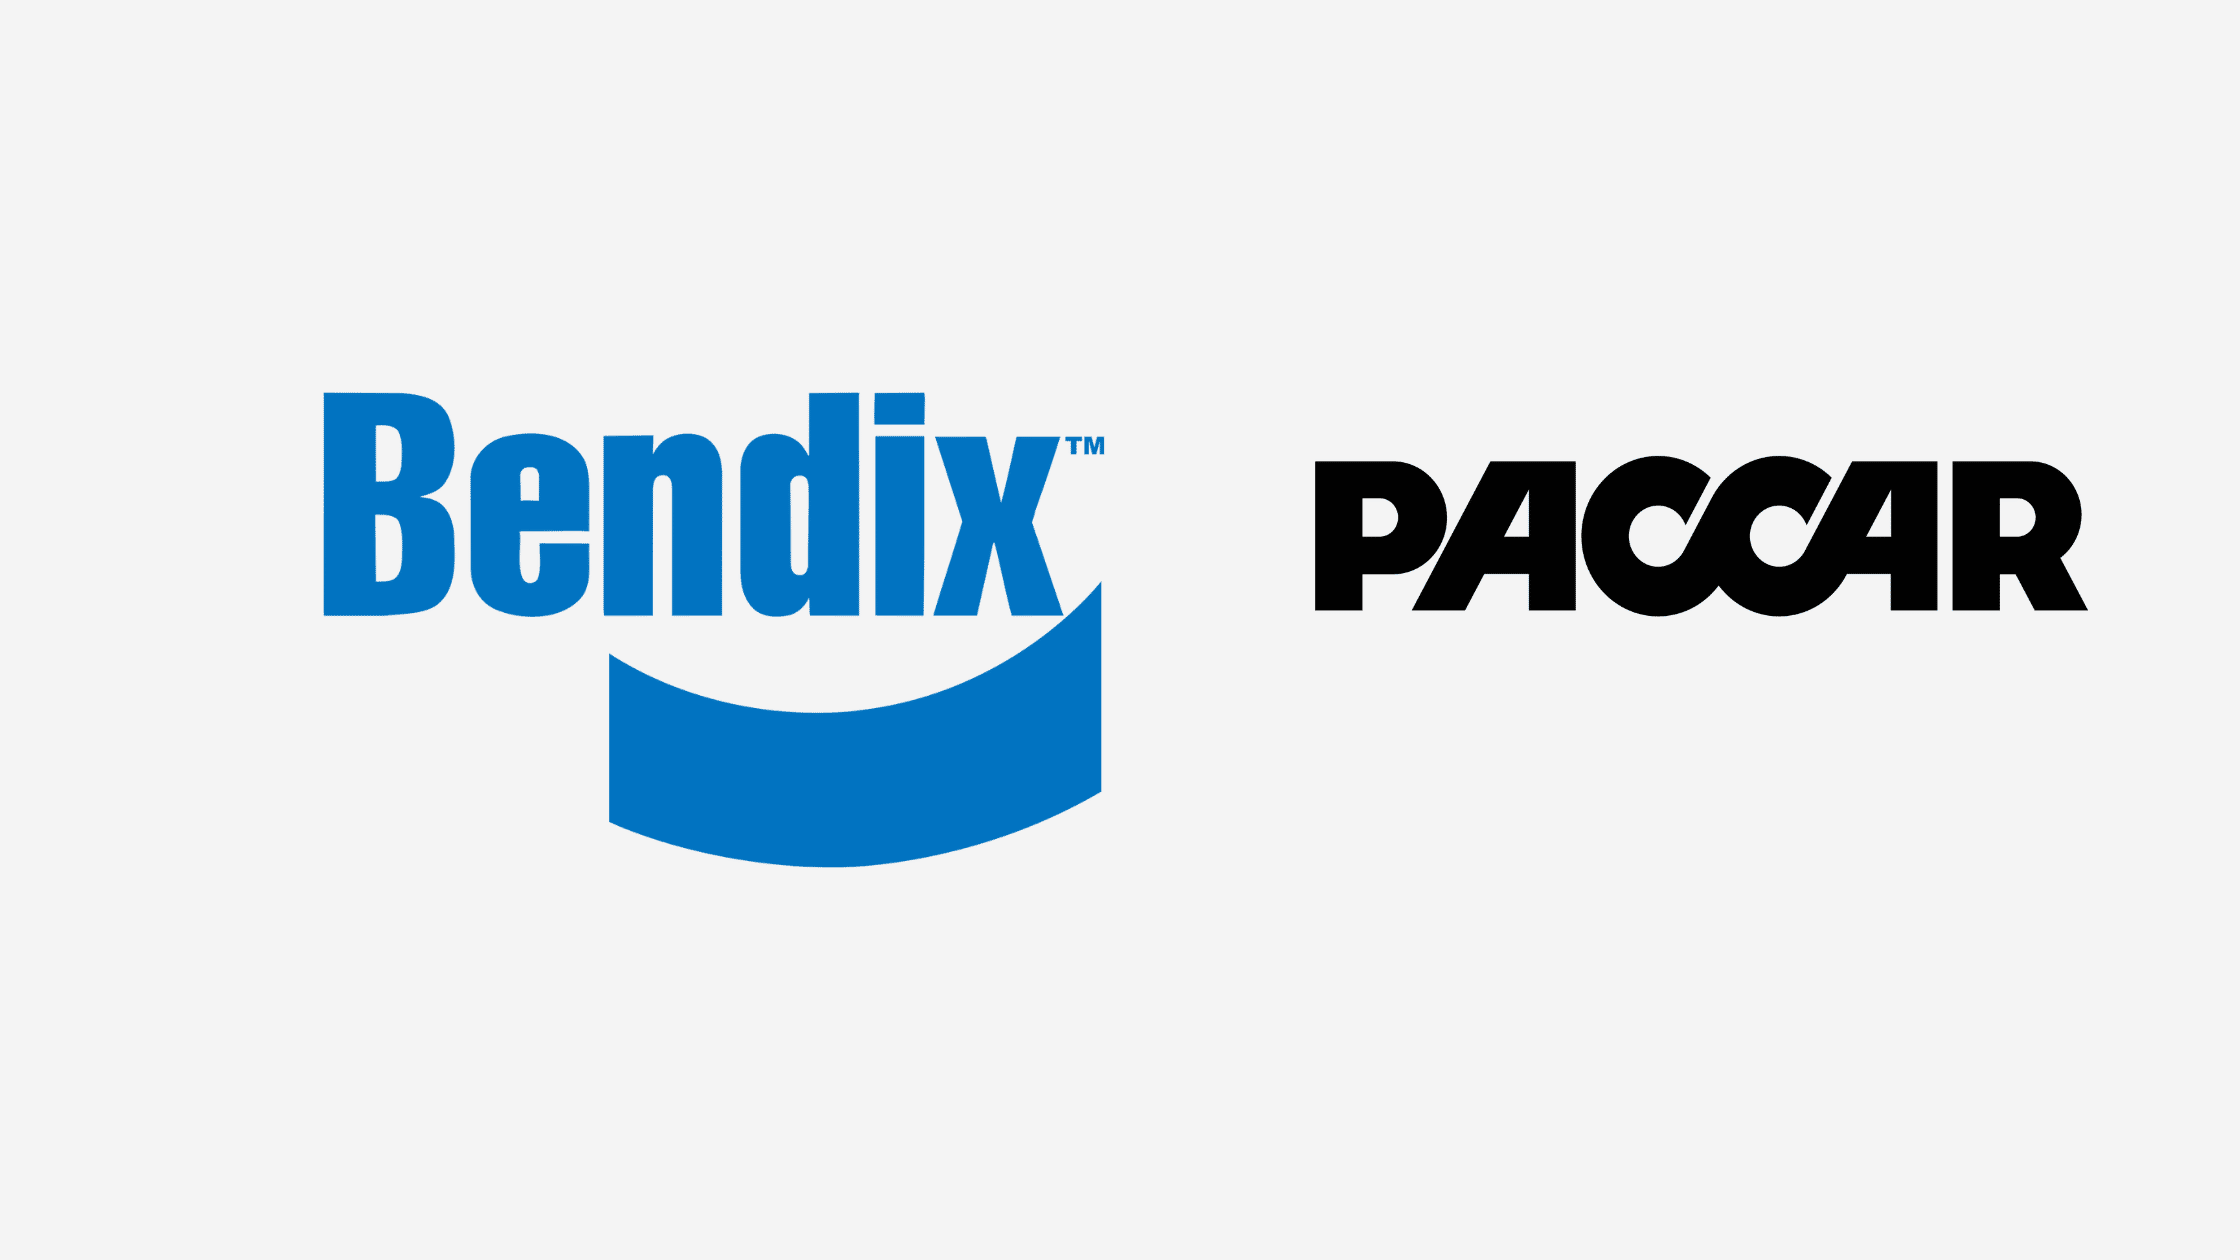 For the sixth consecutive year Bendix has won the PACCAR top supplier award